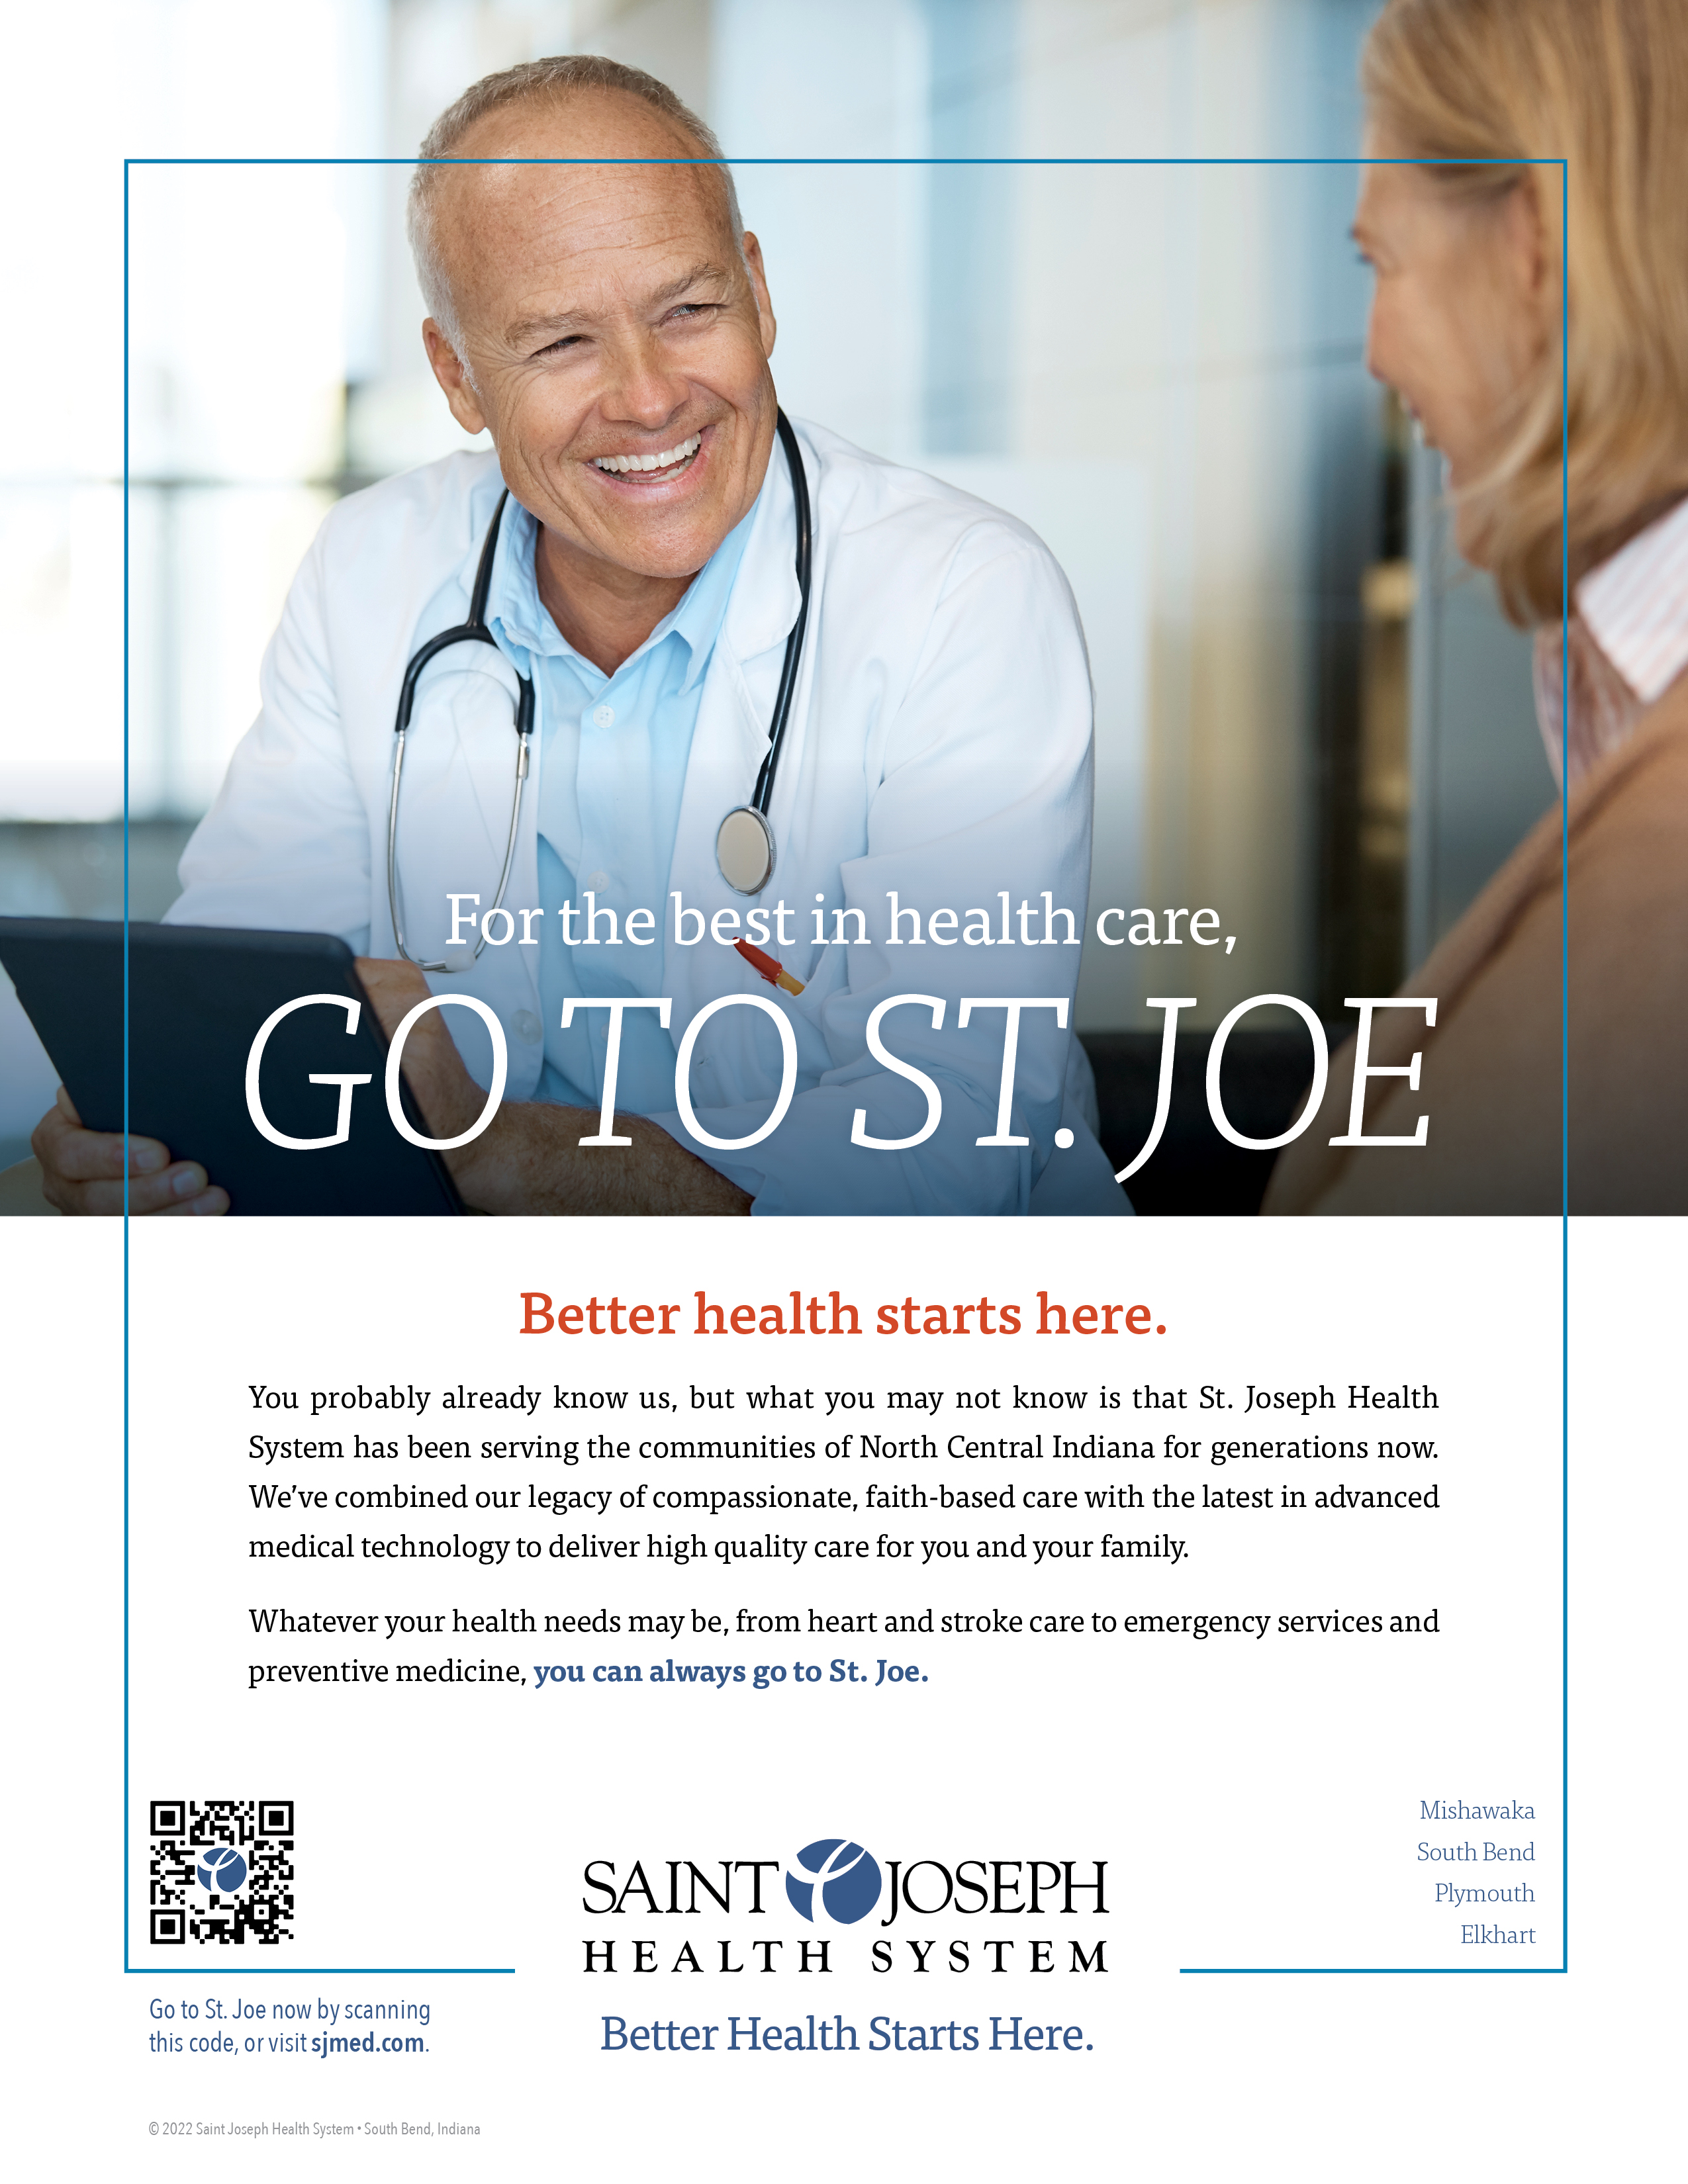 St. Joseph Health System advertisement Doctor